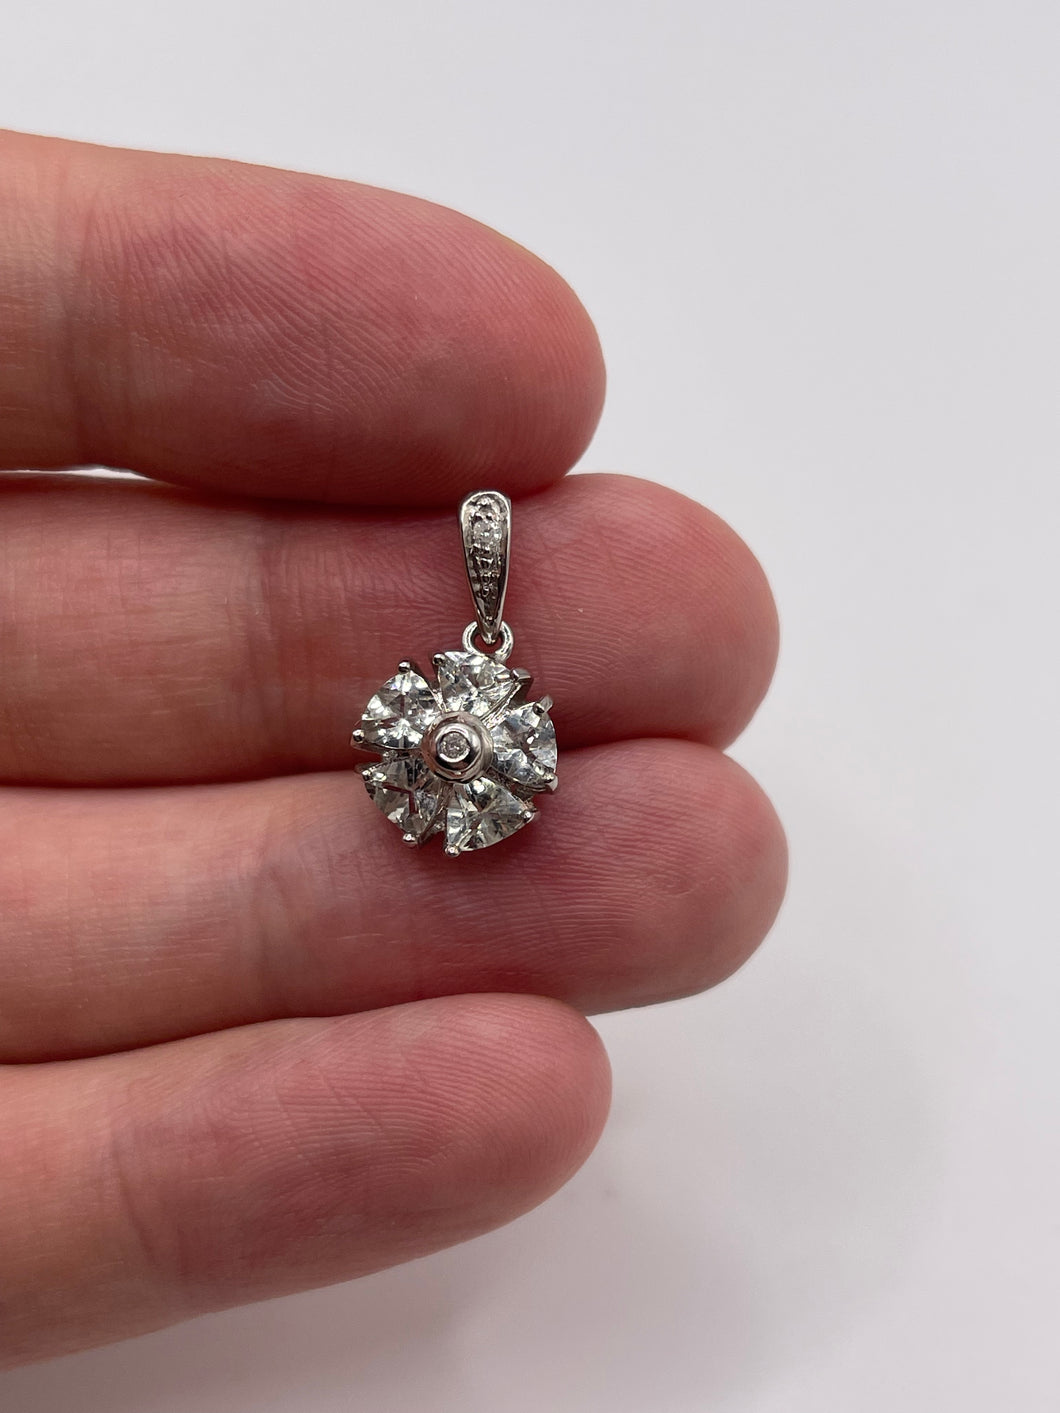 9ct white gold aquamarine and diamond pendant